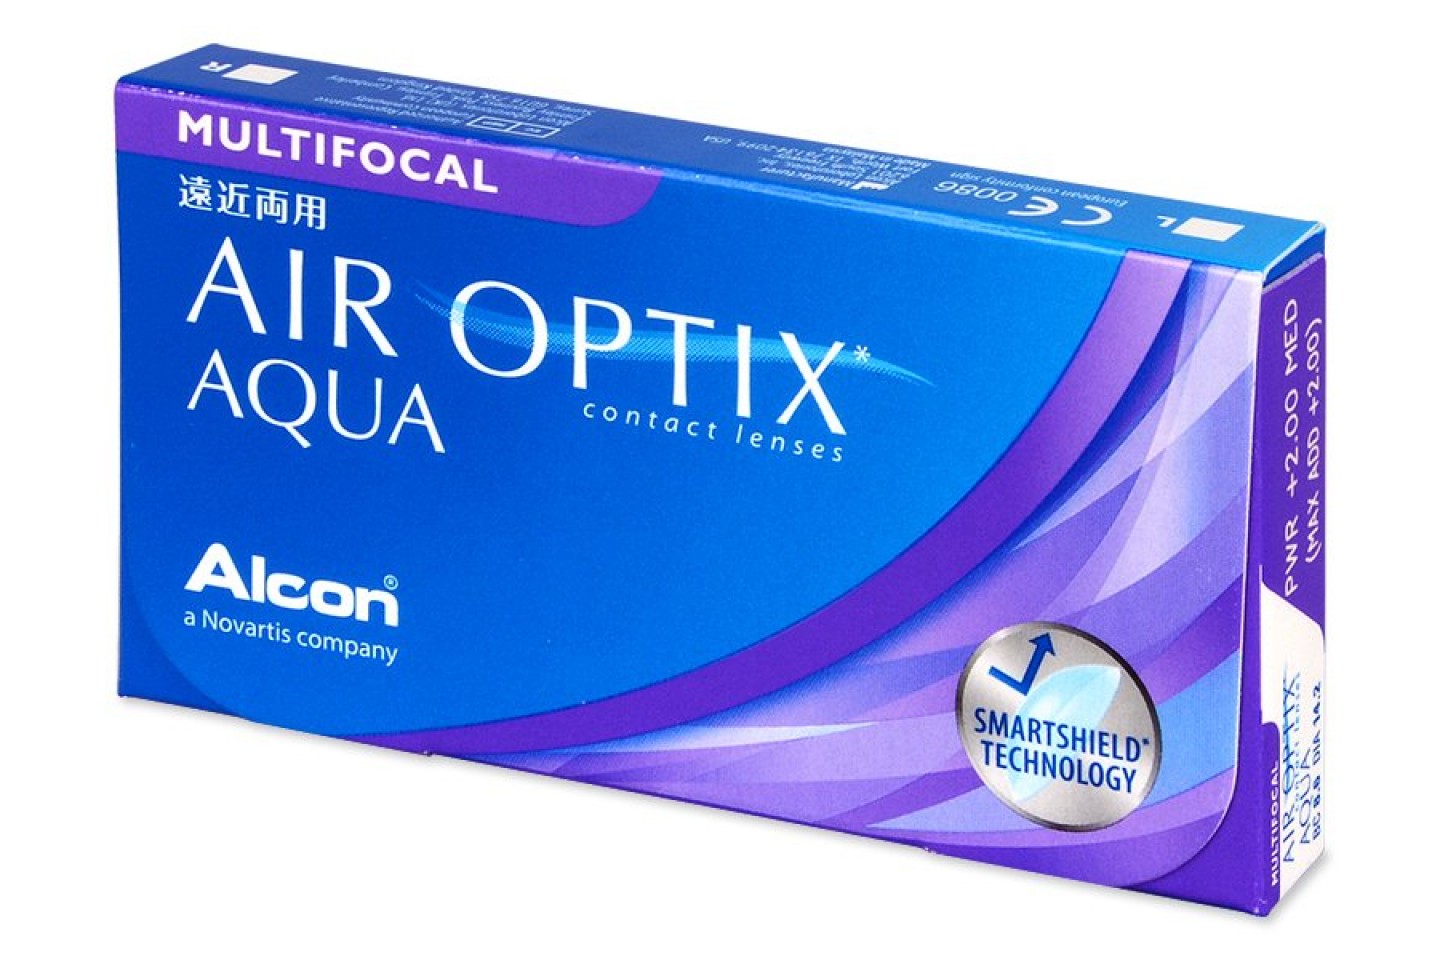 Alcon. Air Optix Aqua Multifocal (3 шт.). Контактные линзы Air Optix мультифокальные. Контактные линзы Alcon Air Optix Aqua 6. Линзы Alcon Multifocal.